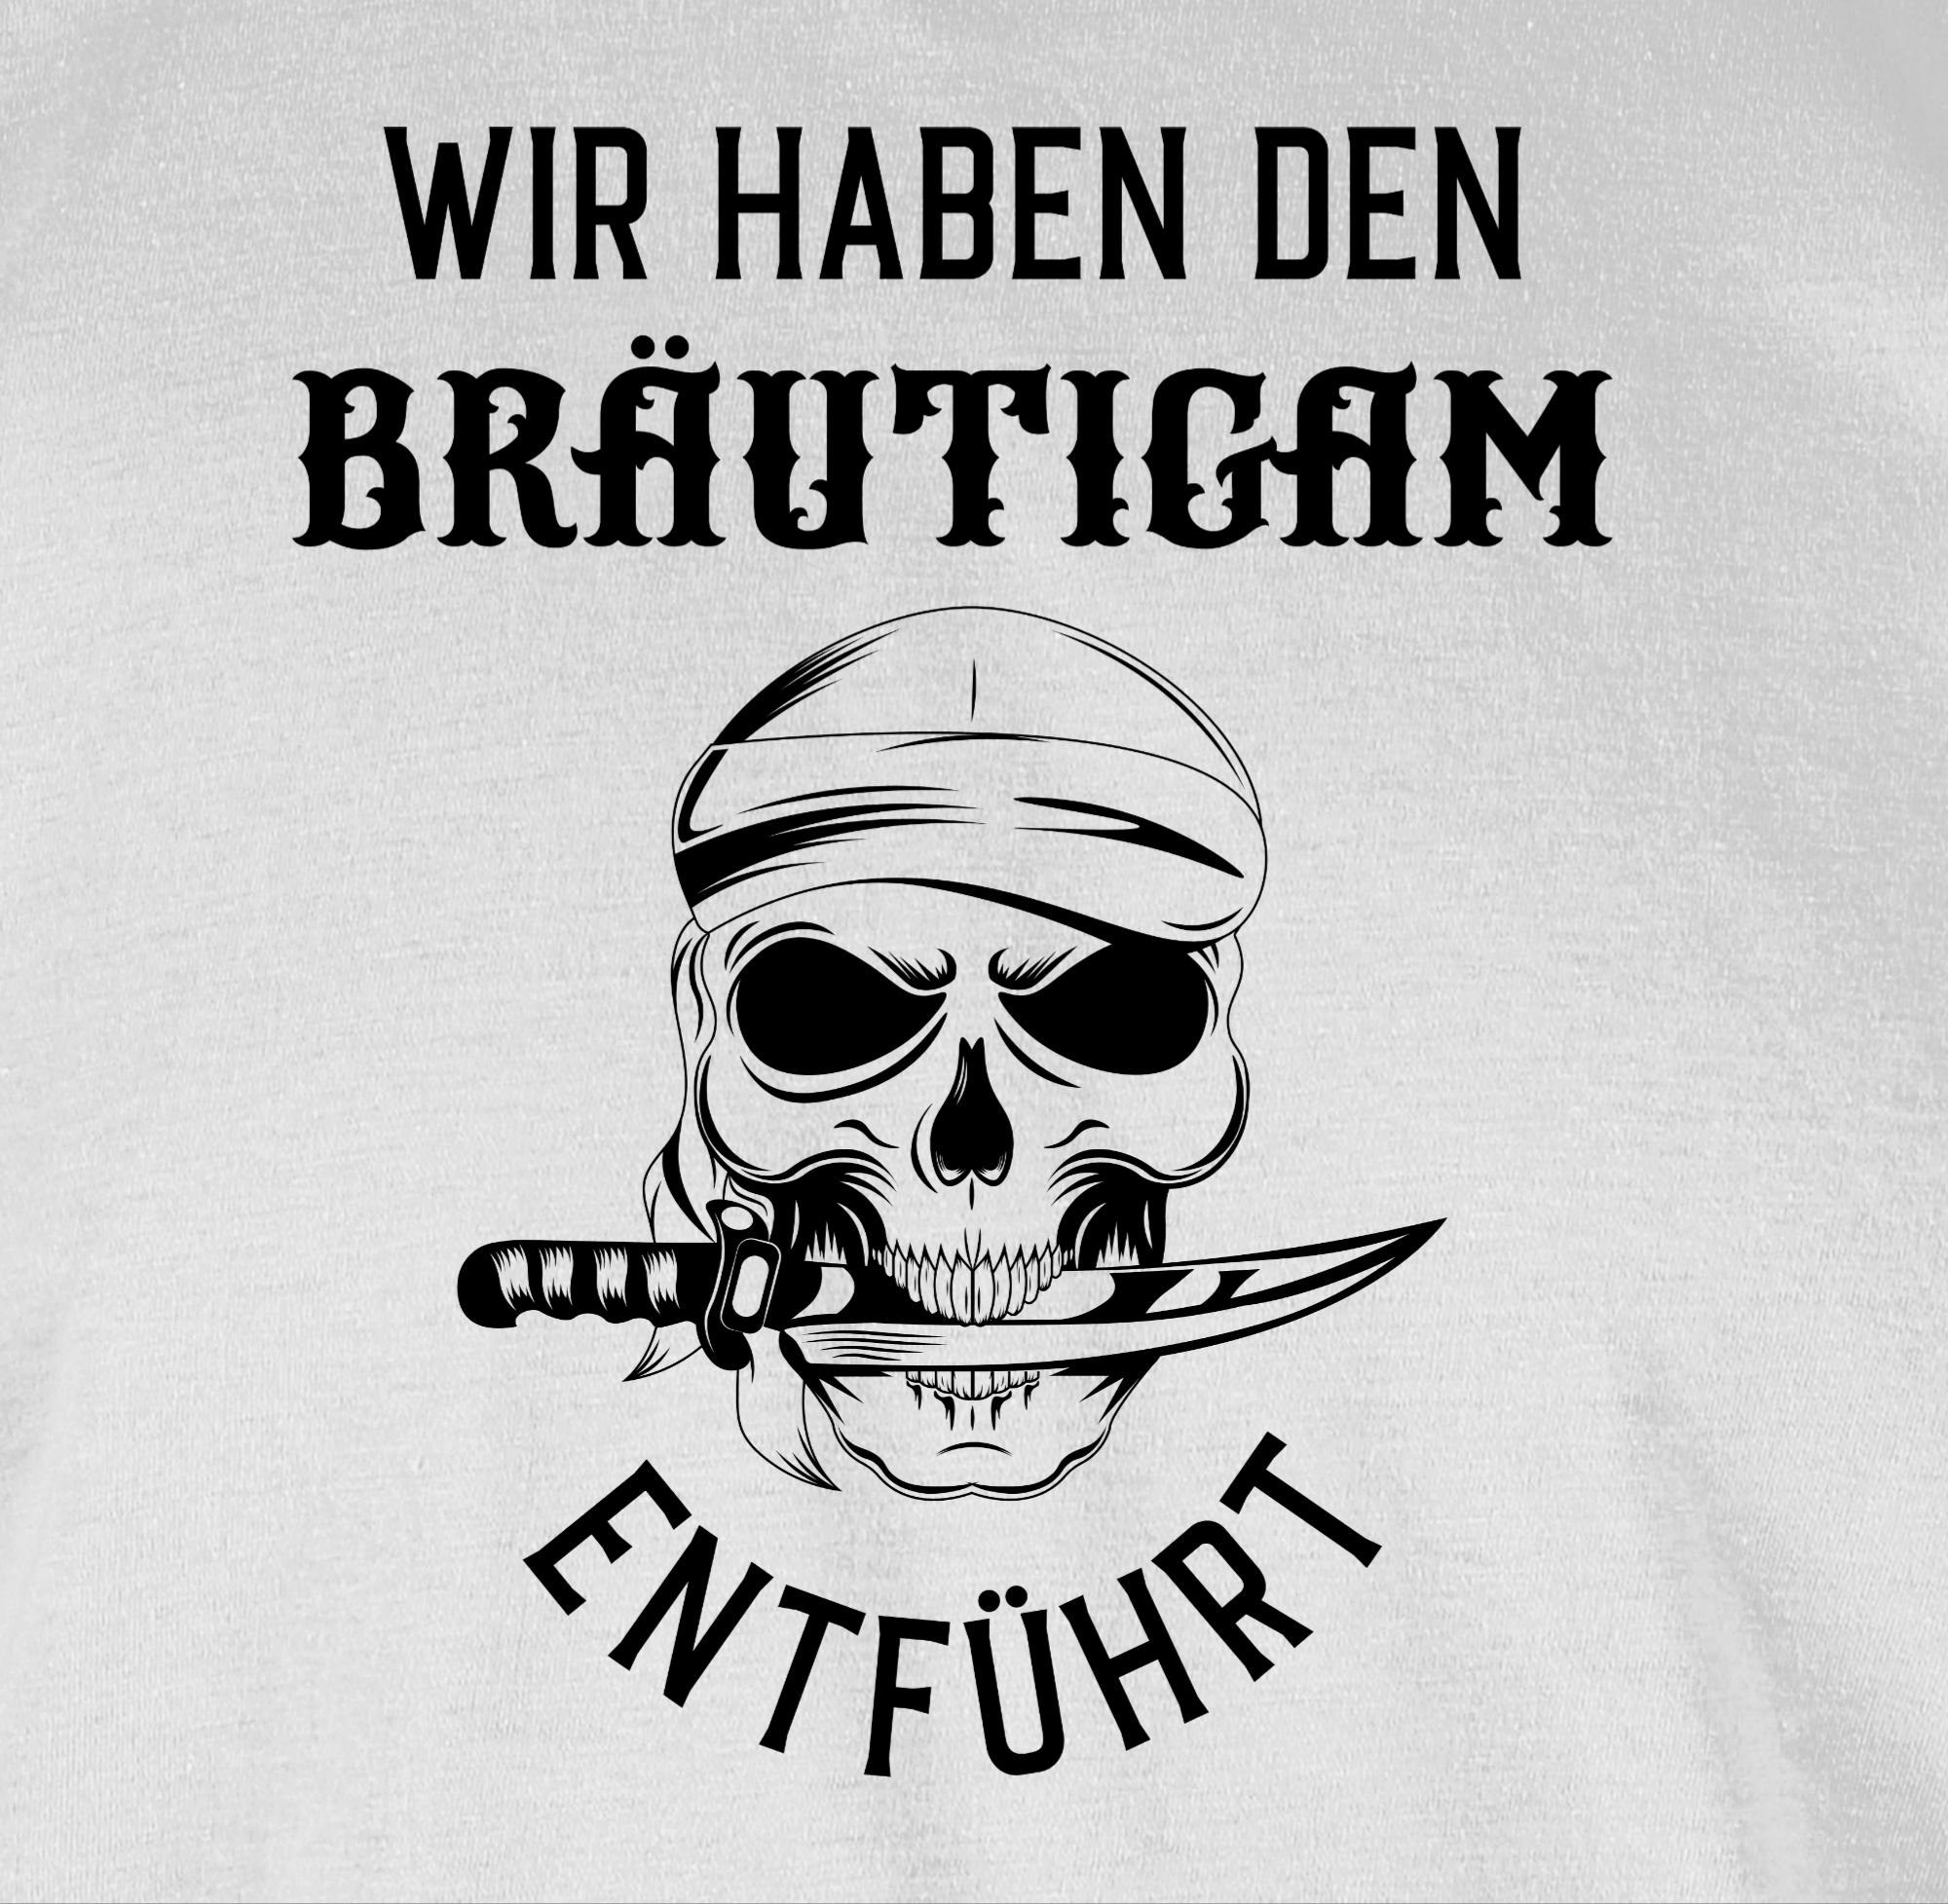 JGA Weiß Piratenkopf Shirtracer entführt haben den Männer T-Shirt Bräutigam Wir 02